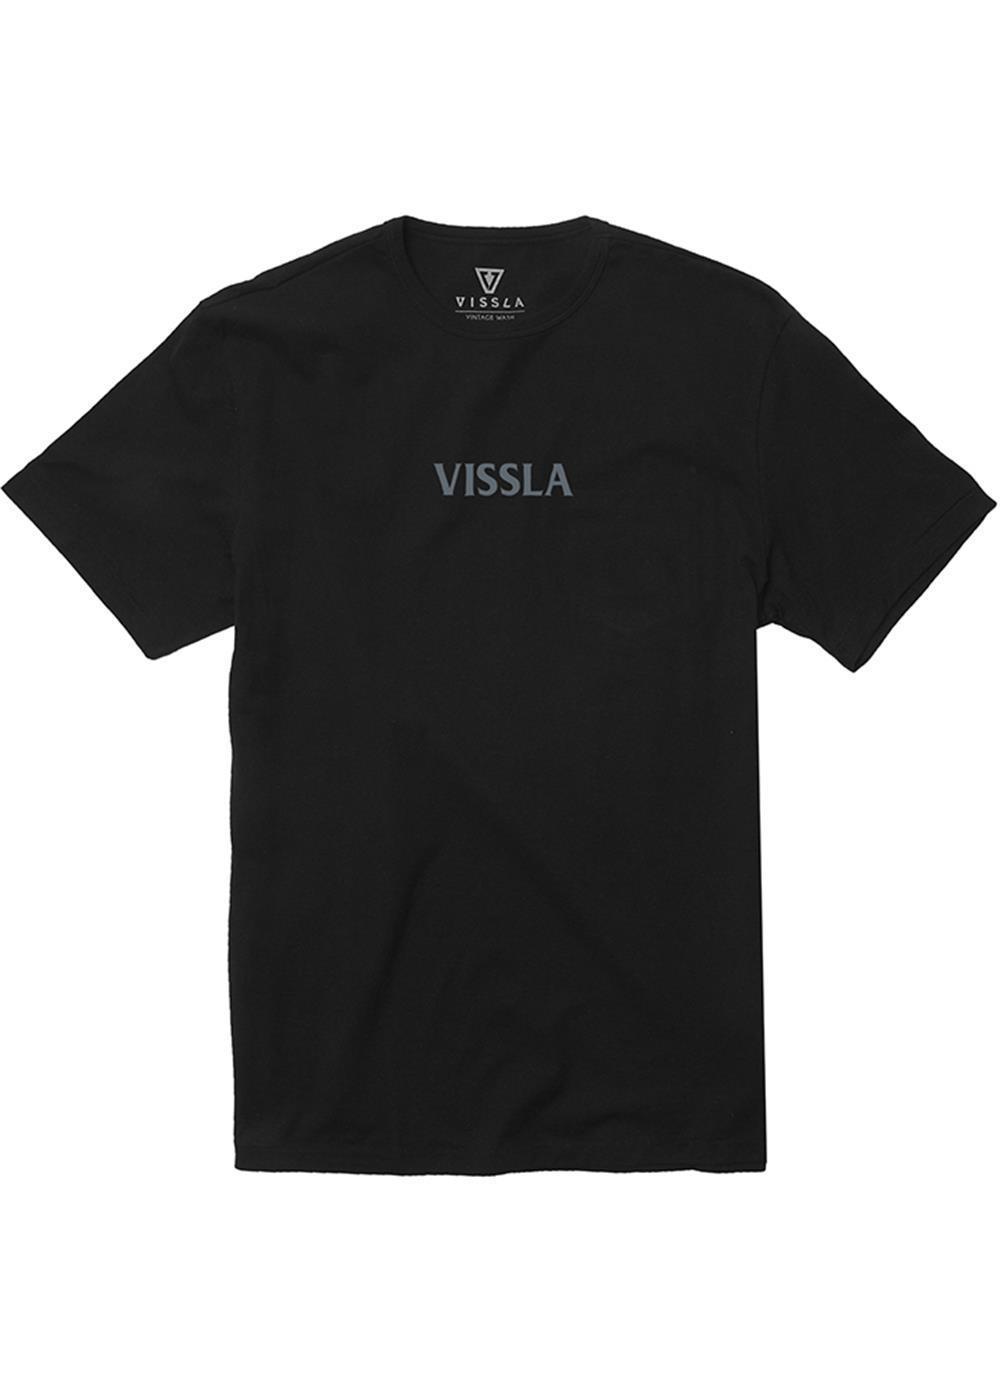 Vissla Local T (Black) - KS Boardriders Surf Shop